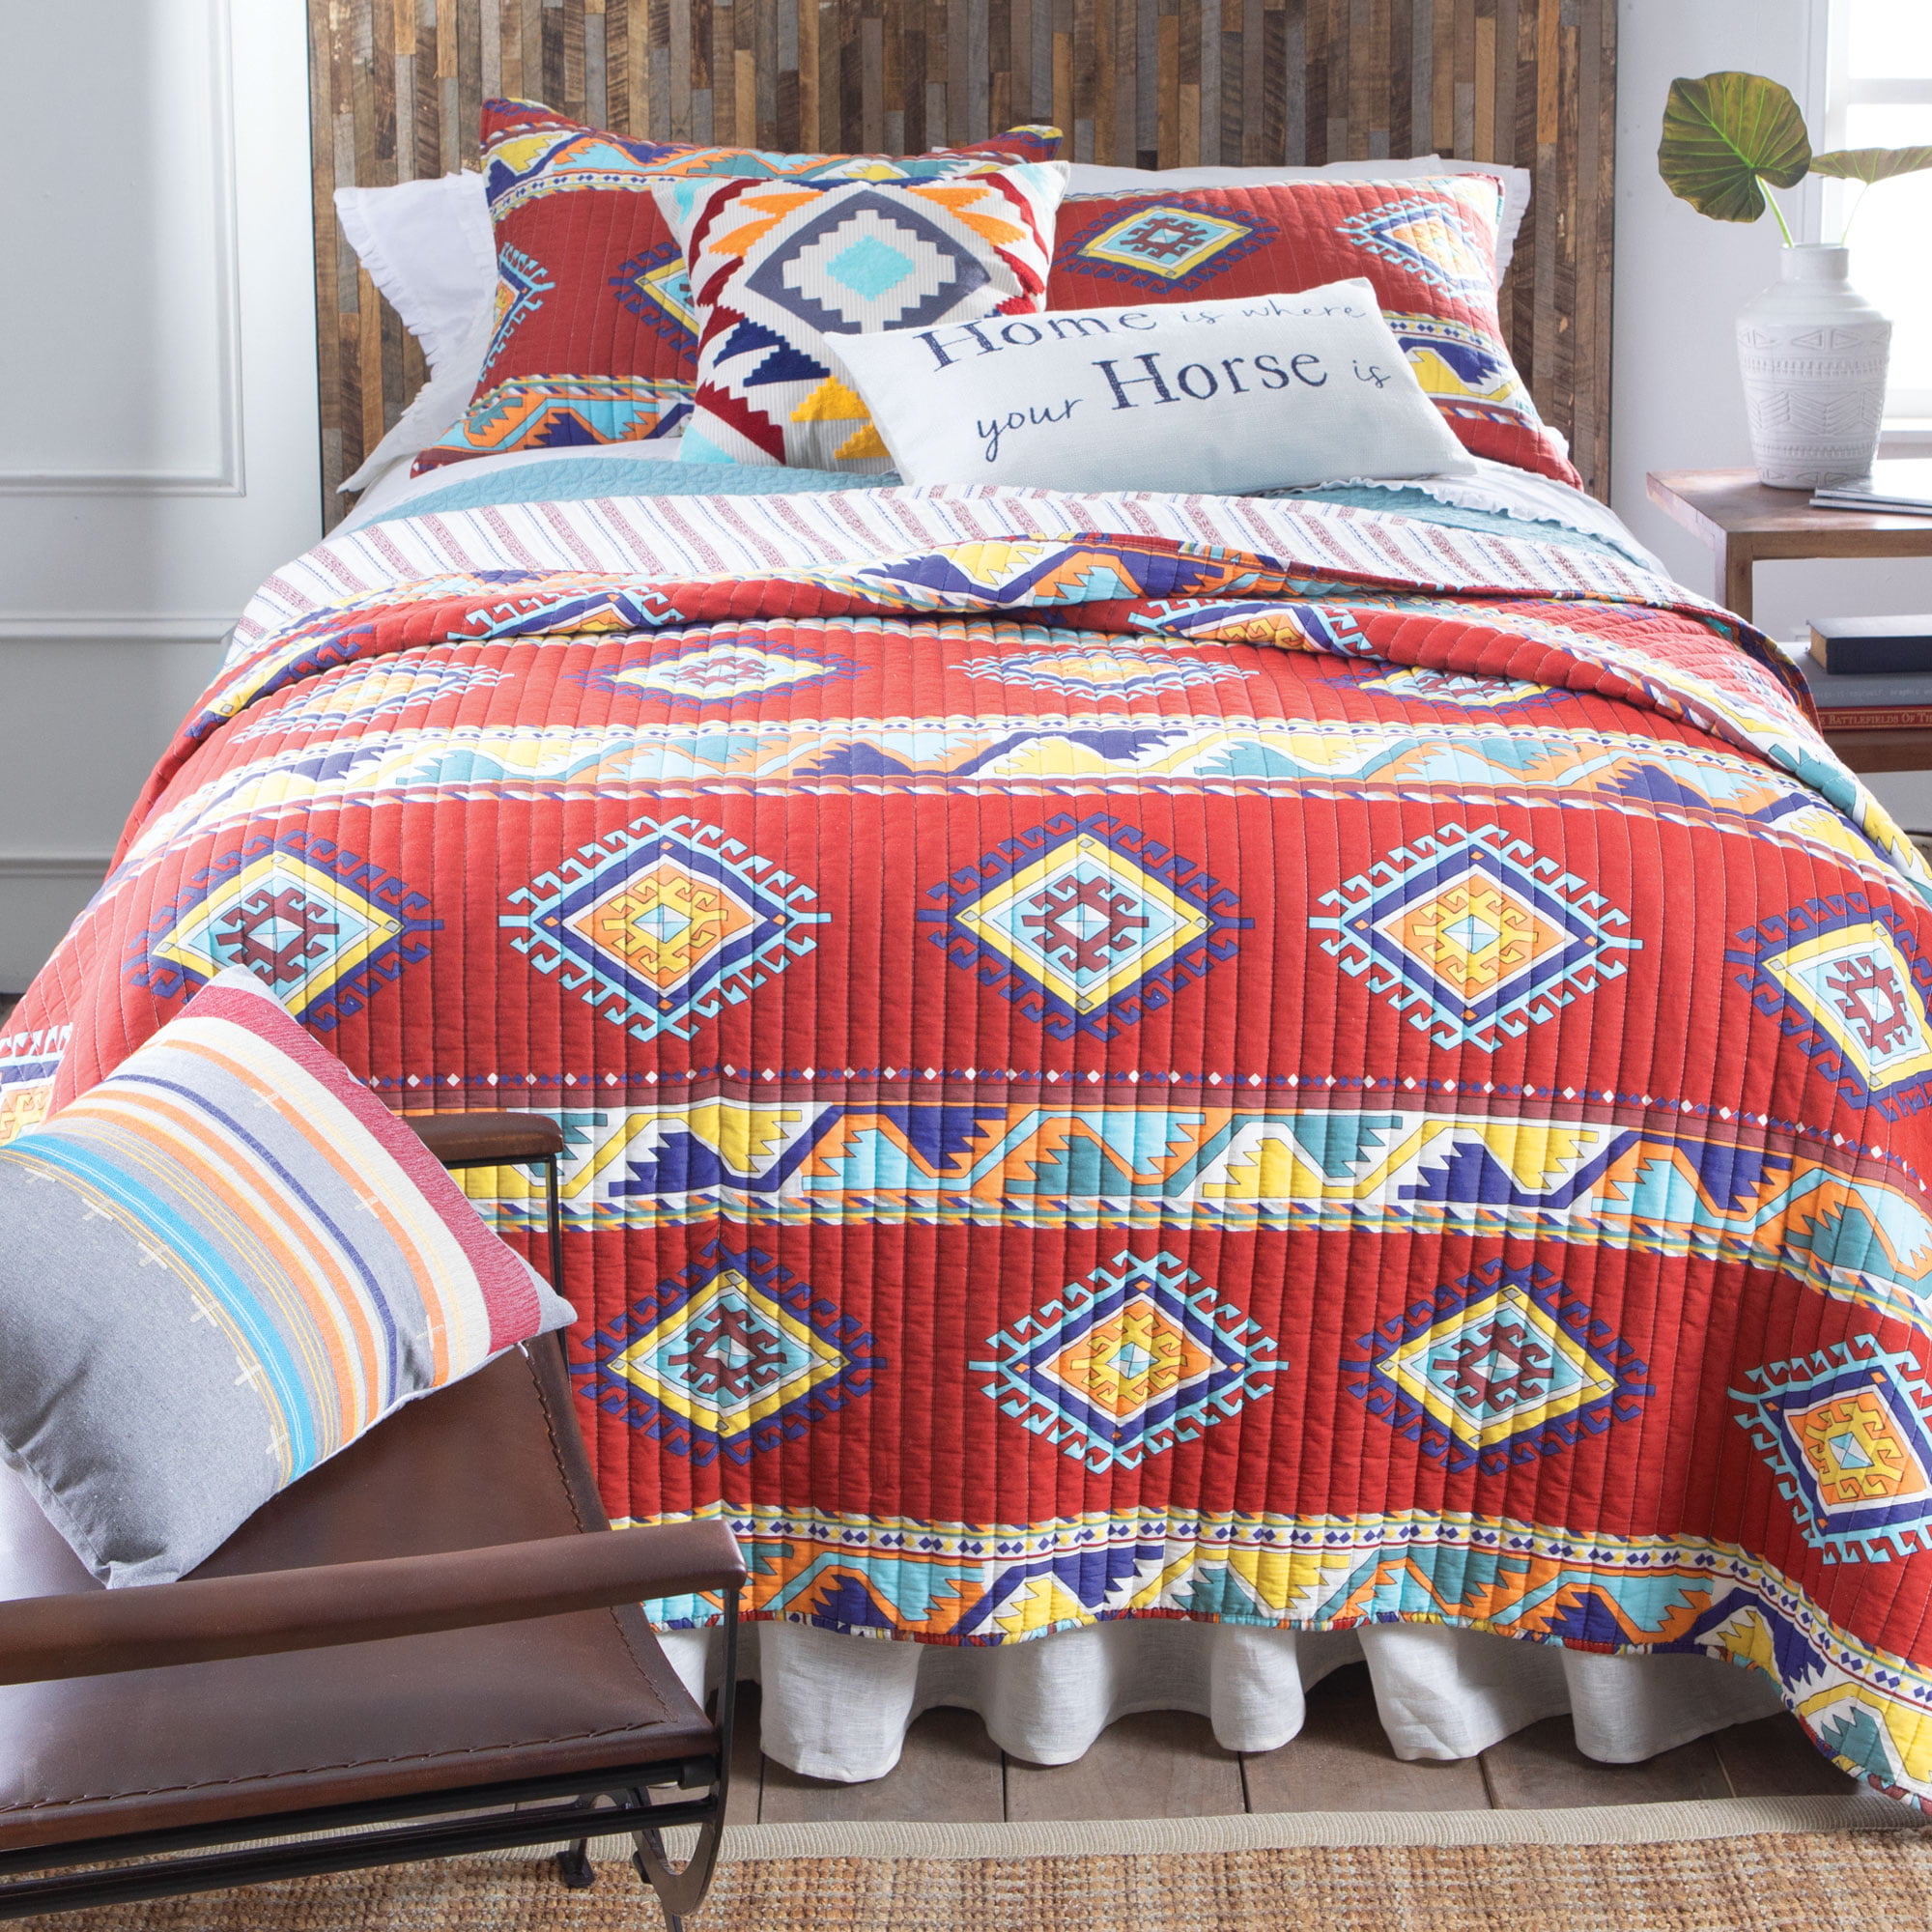 Details about   Indian Handmade Bedding Donna Mandala Print Blanket Hippie Comforter Duvet Cover 